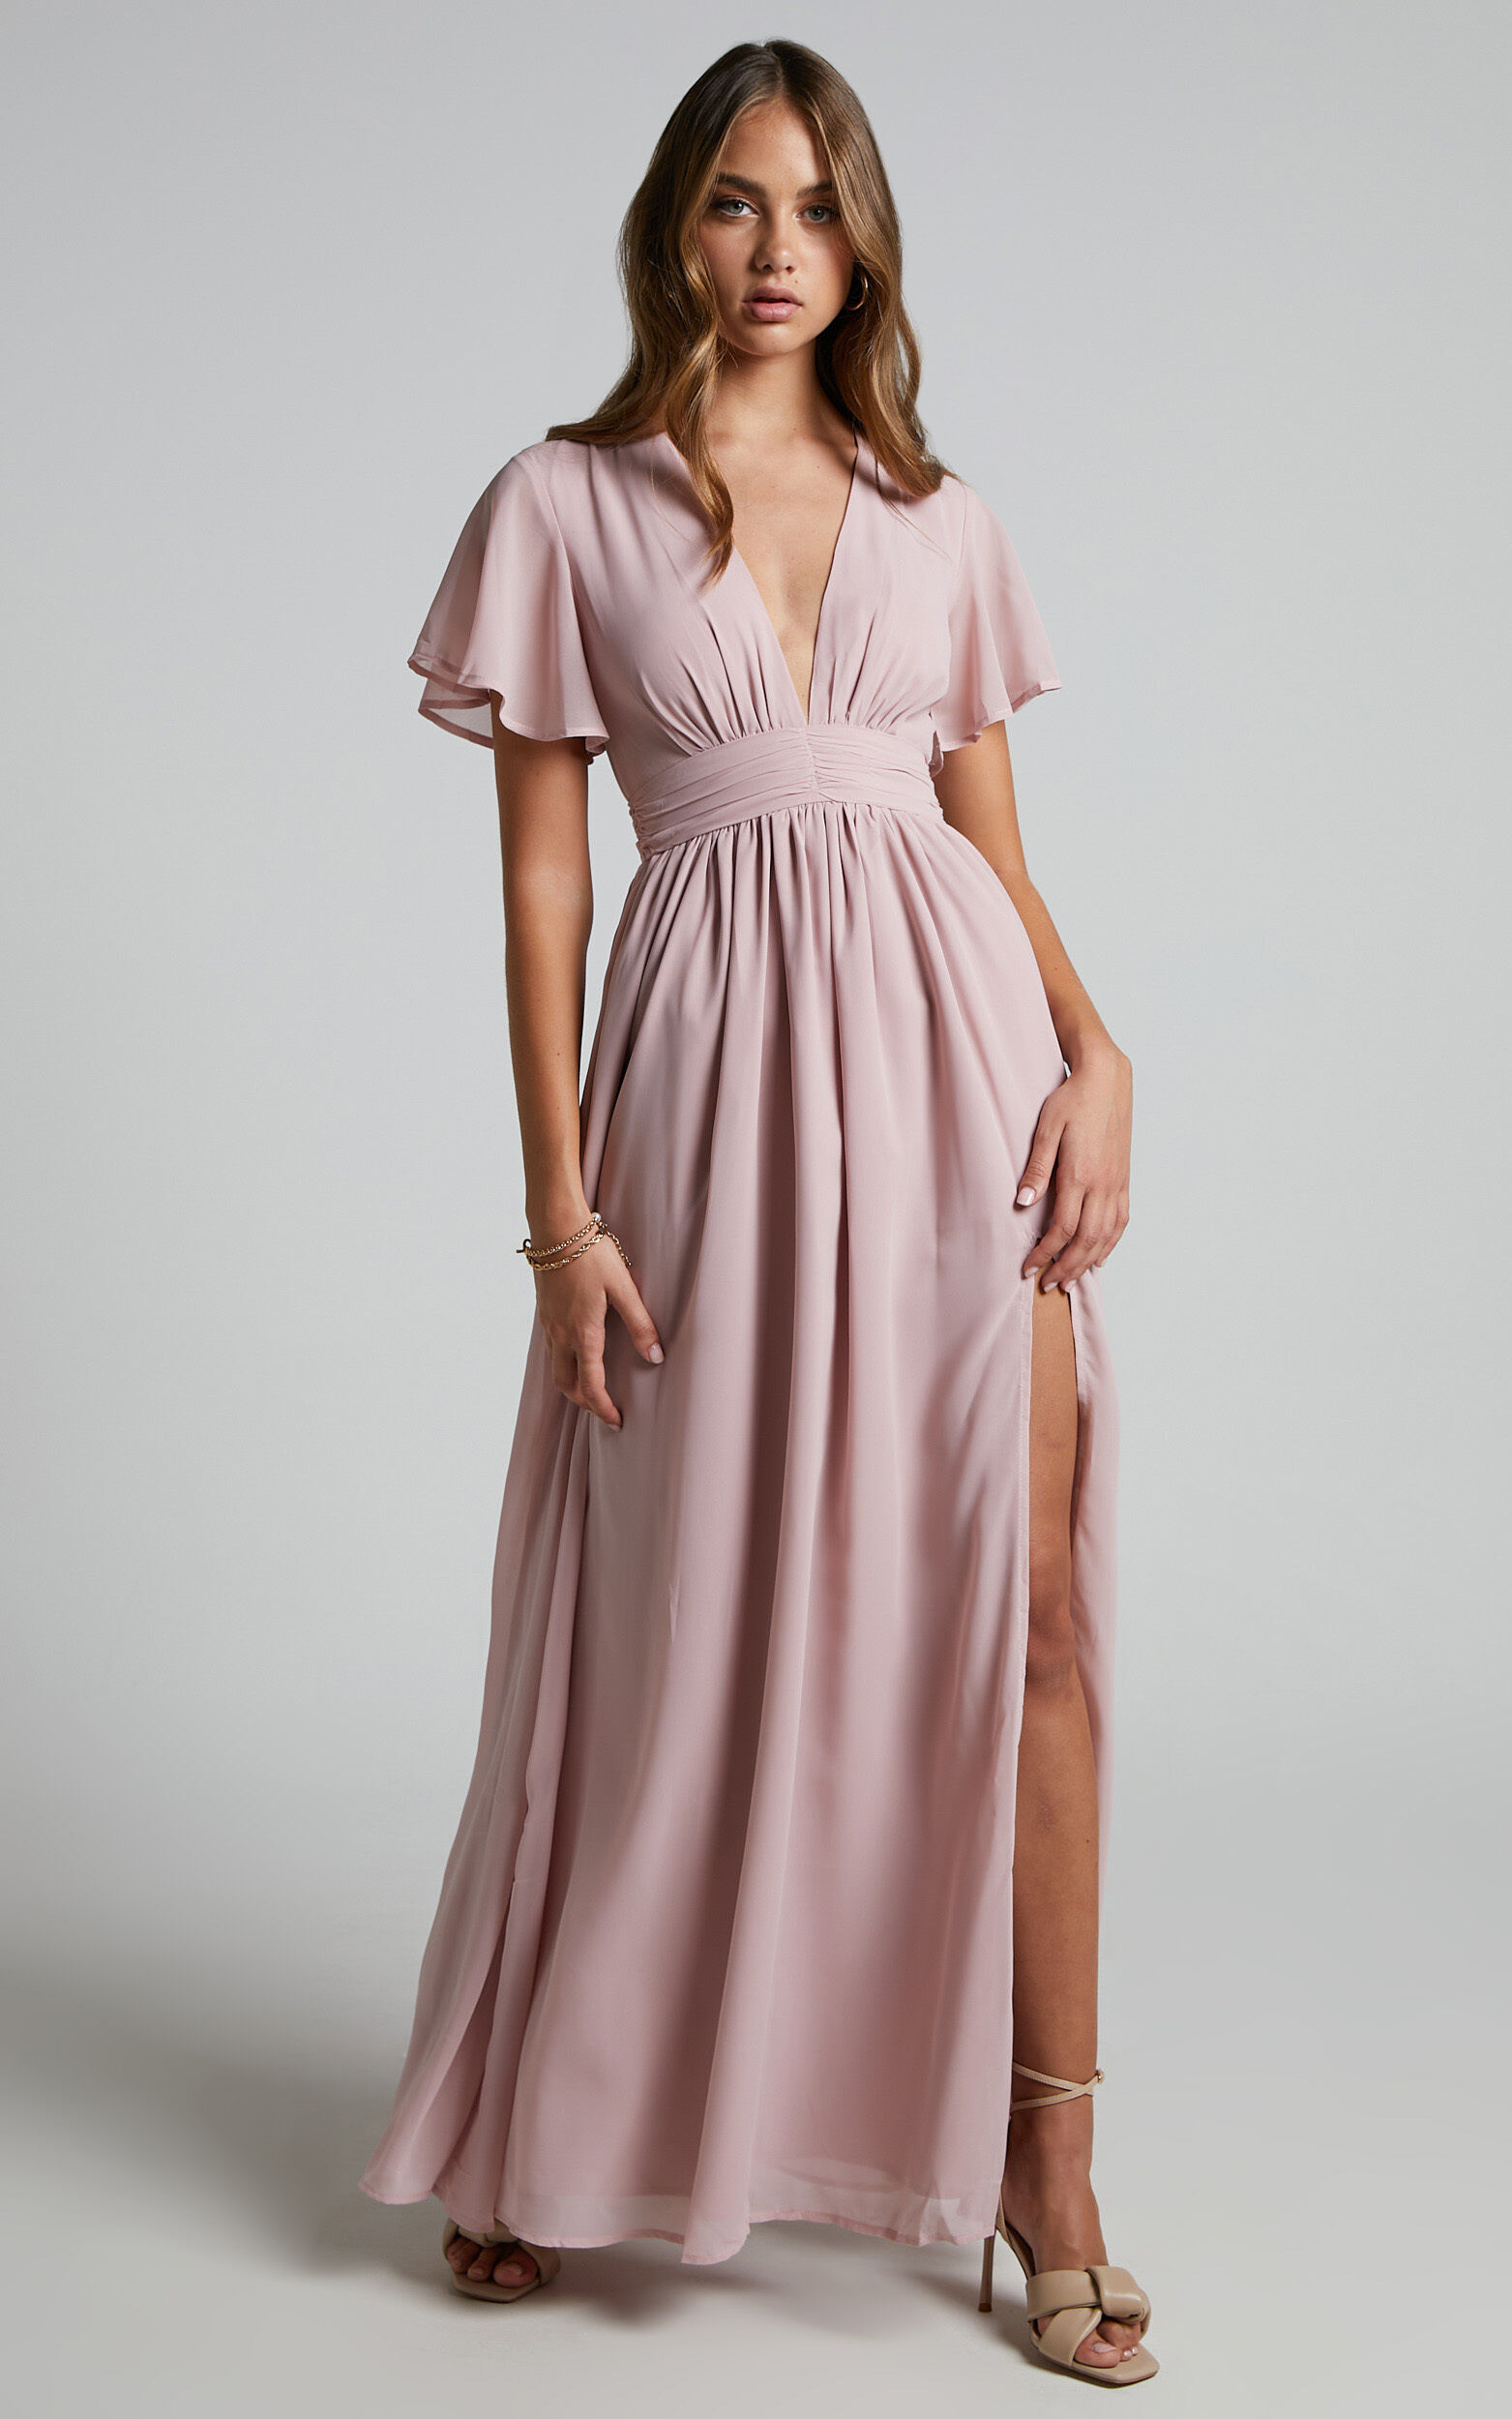 December Midi Dress - Empire Waist Dress in Dusty Pink - 06, PNK1